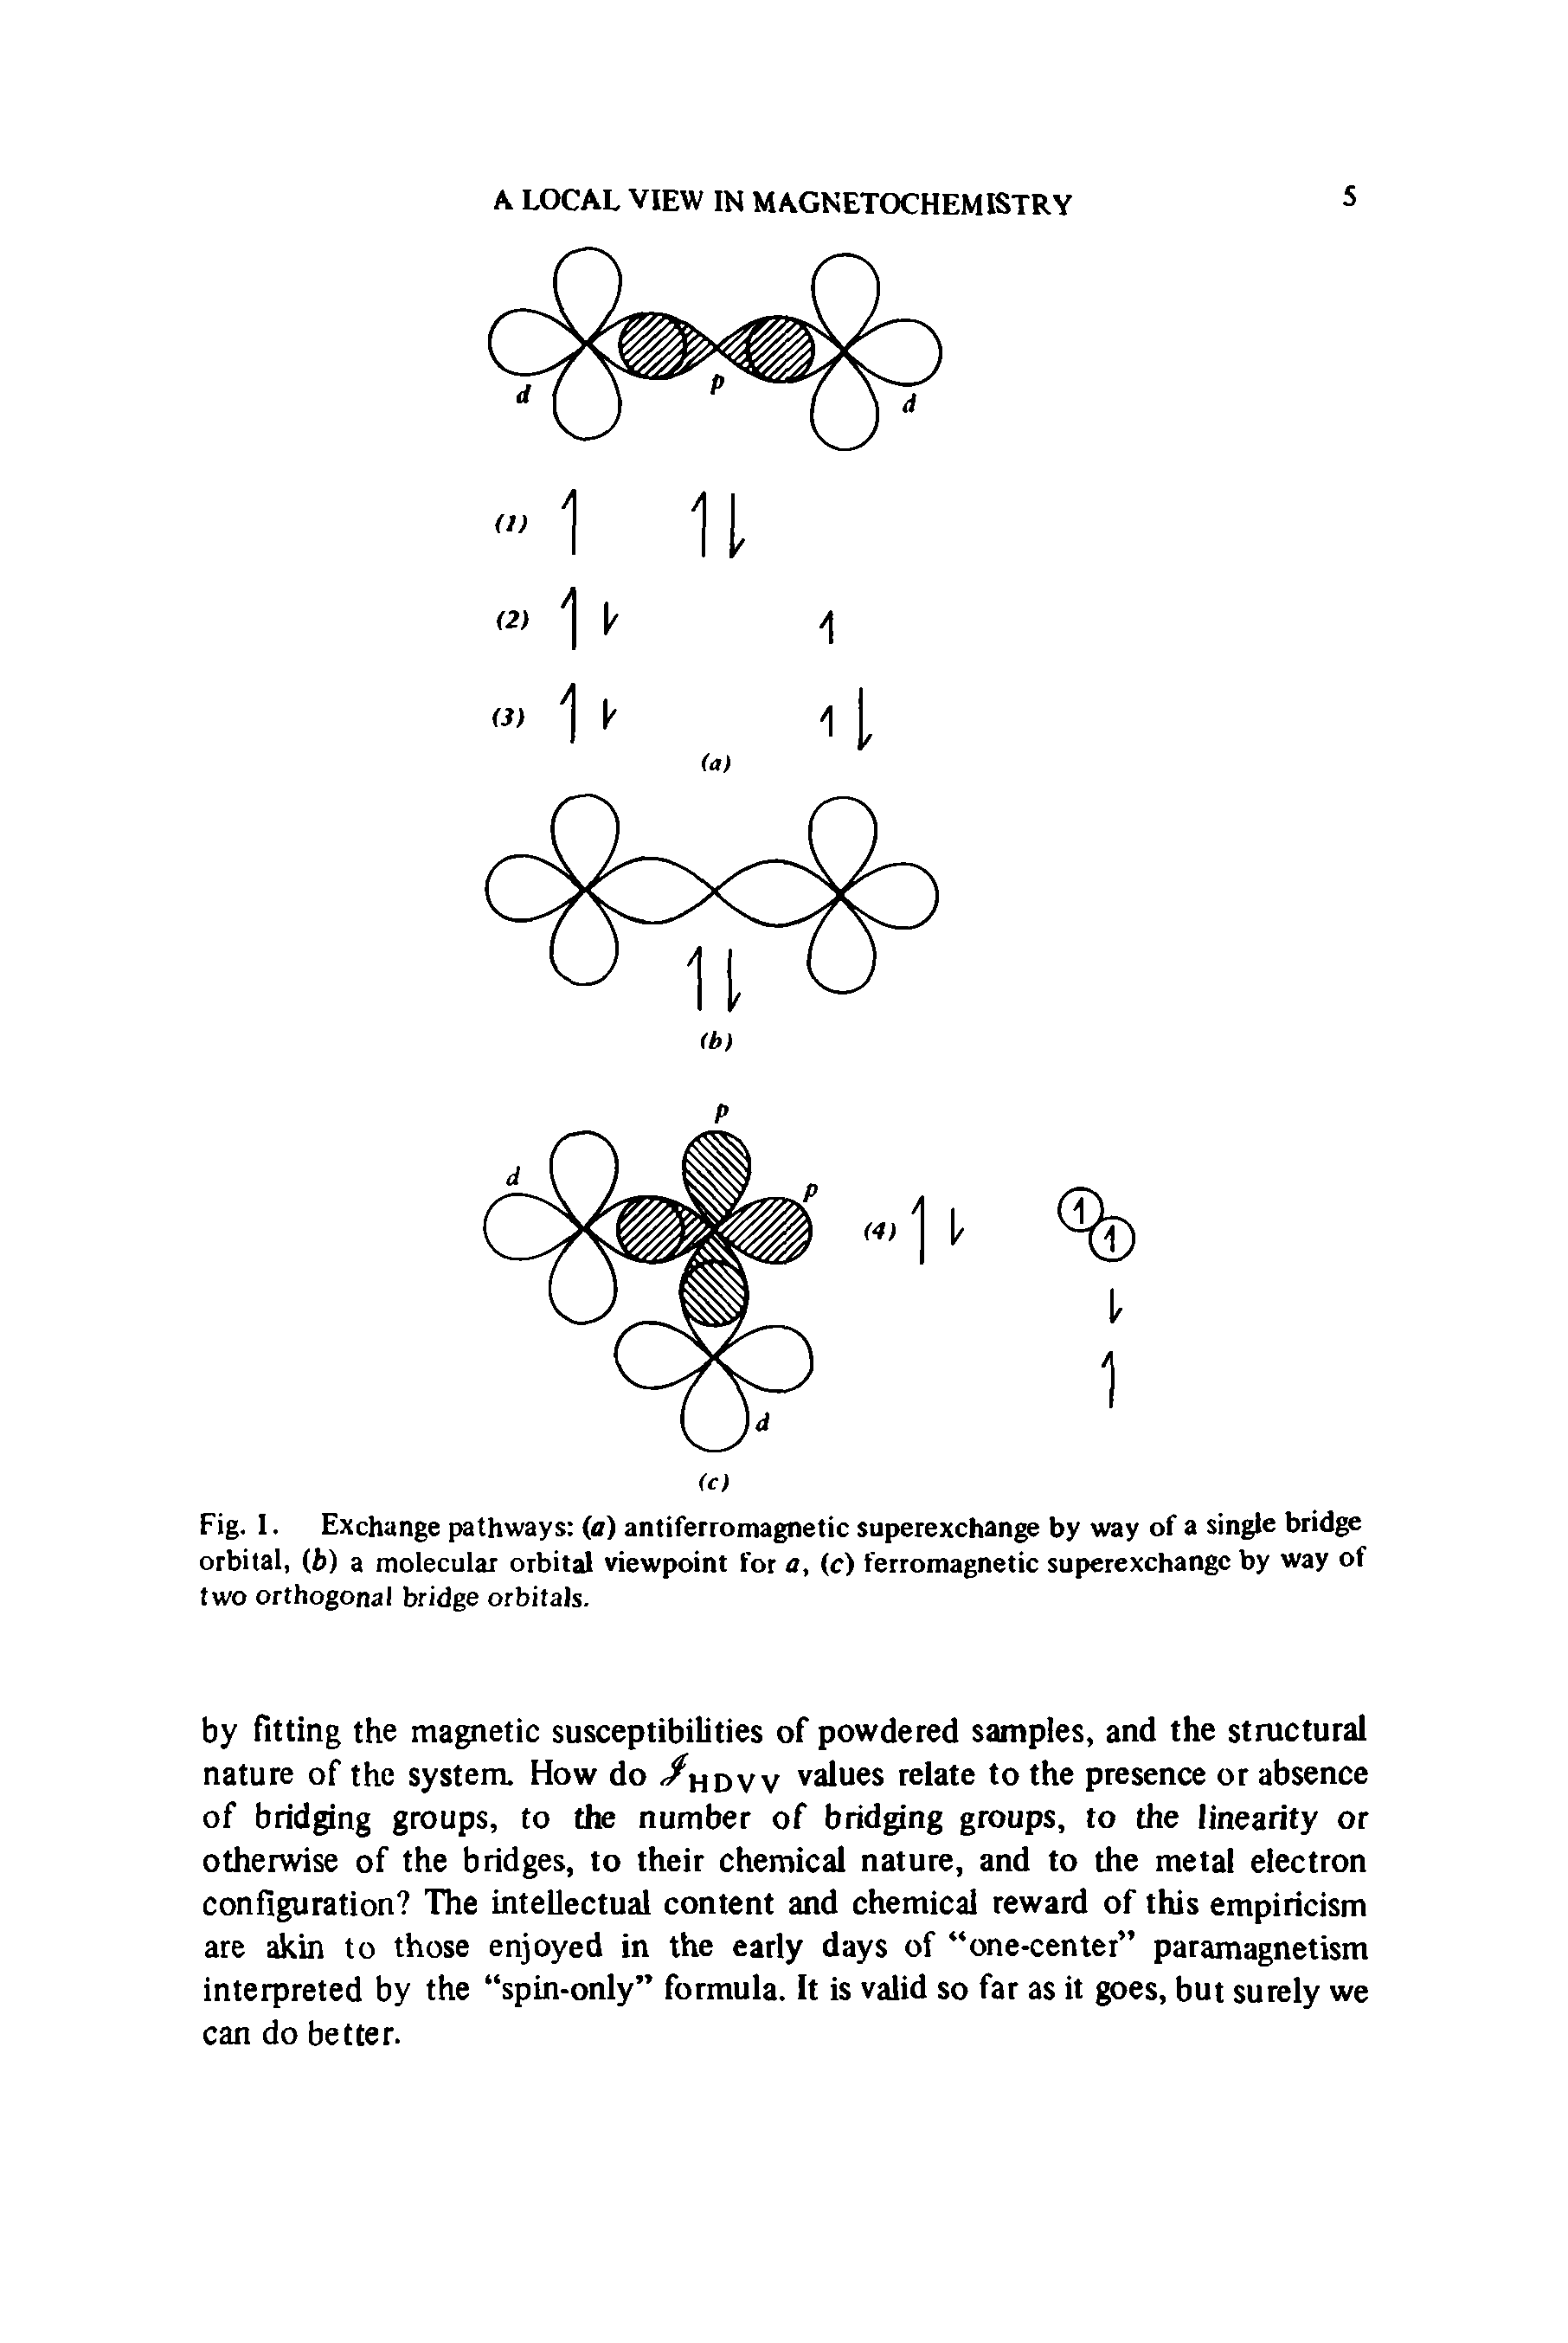 Fig. 1. Exchange pathways (a) antiferromagnetic superexchange by way of a single bridge orbital, (b) a molecular orbital viewpoint for a, (c) ferromagnetic superexchangc by way of two orthogonal bridge orbitals.